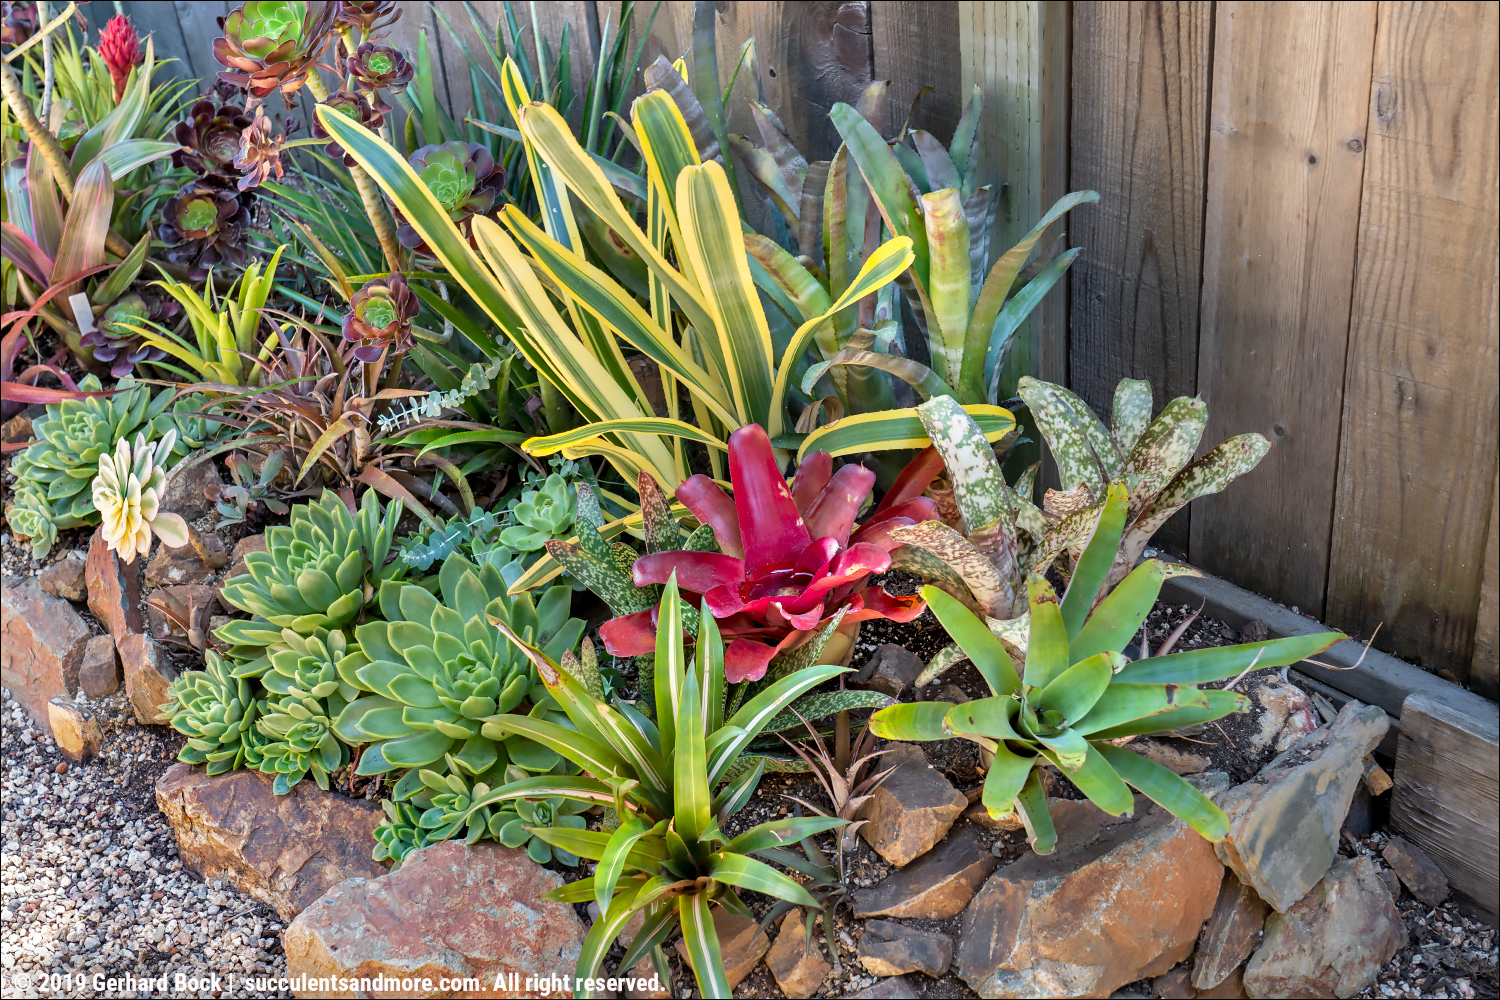 Image of Cycads companion plants for bromeliad